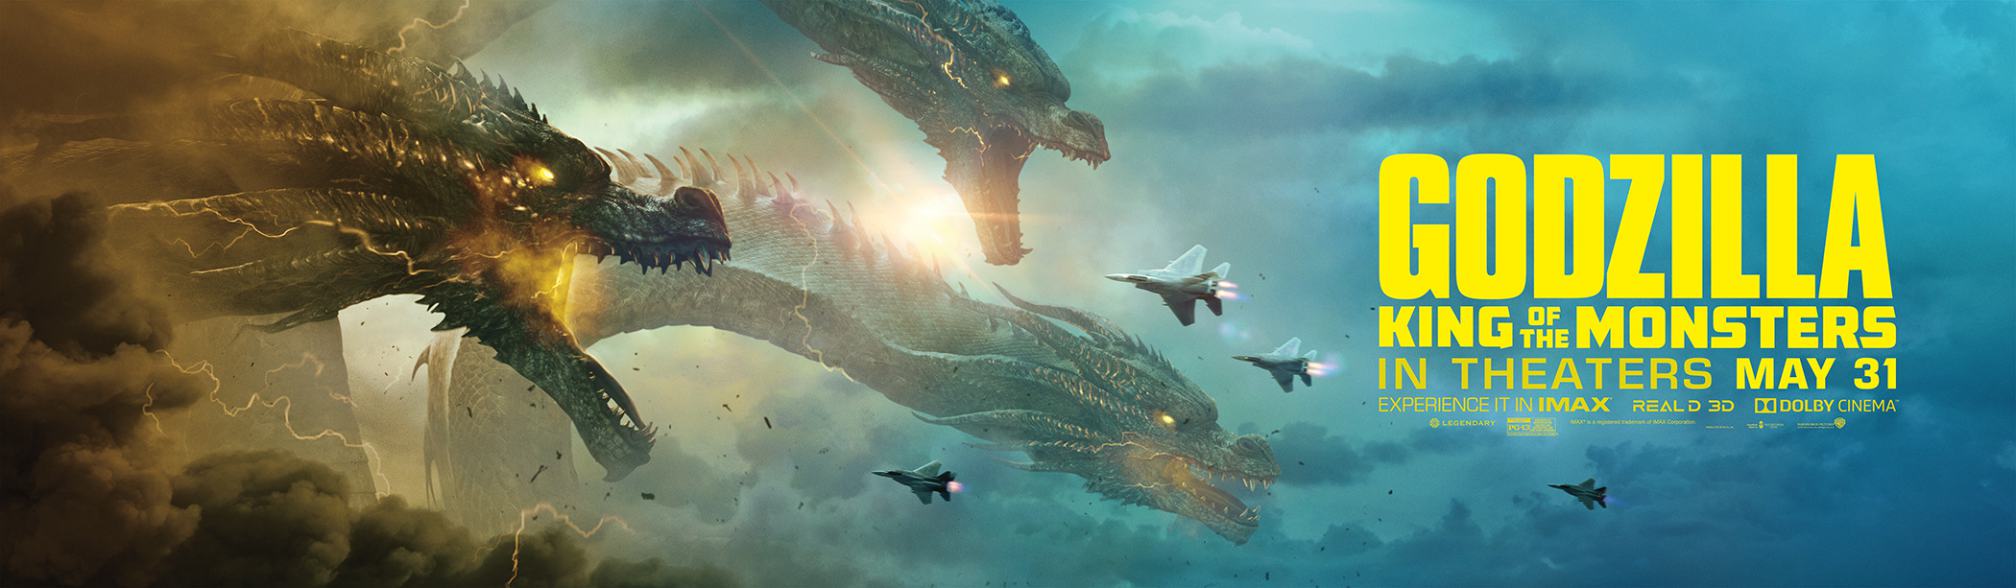 Godzilla King Monsters Poster